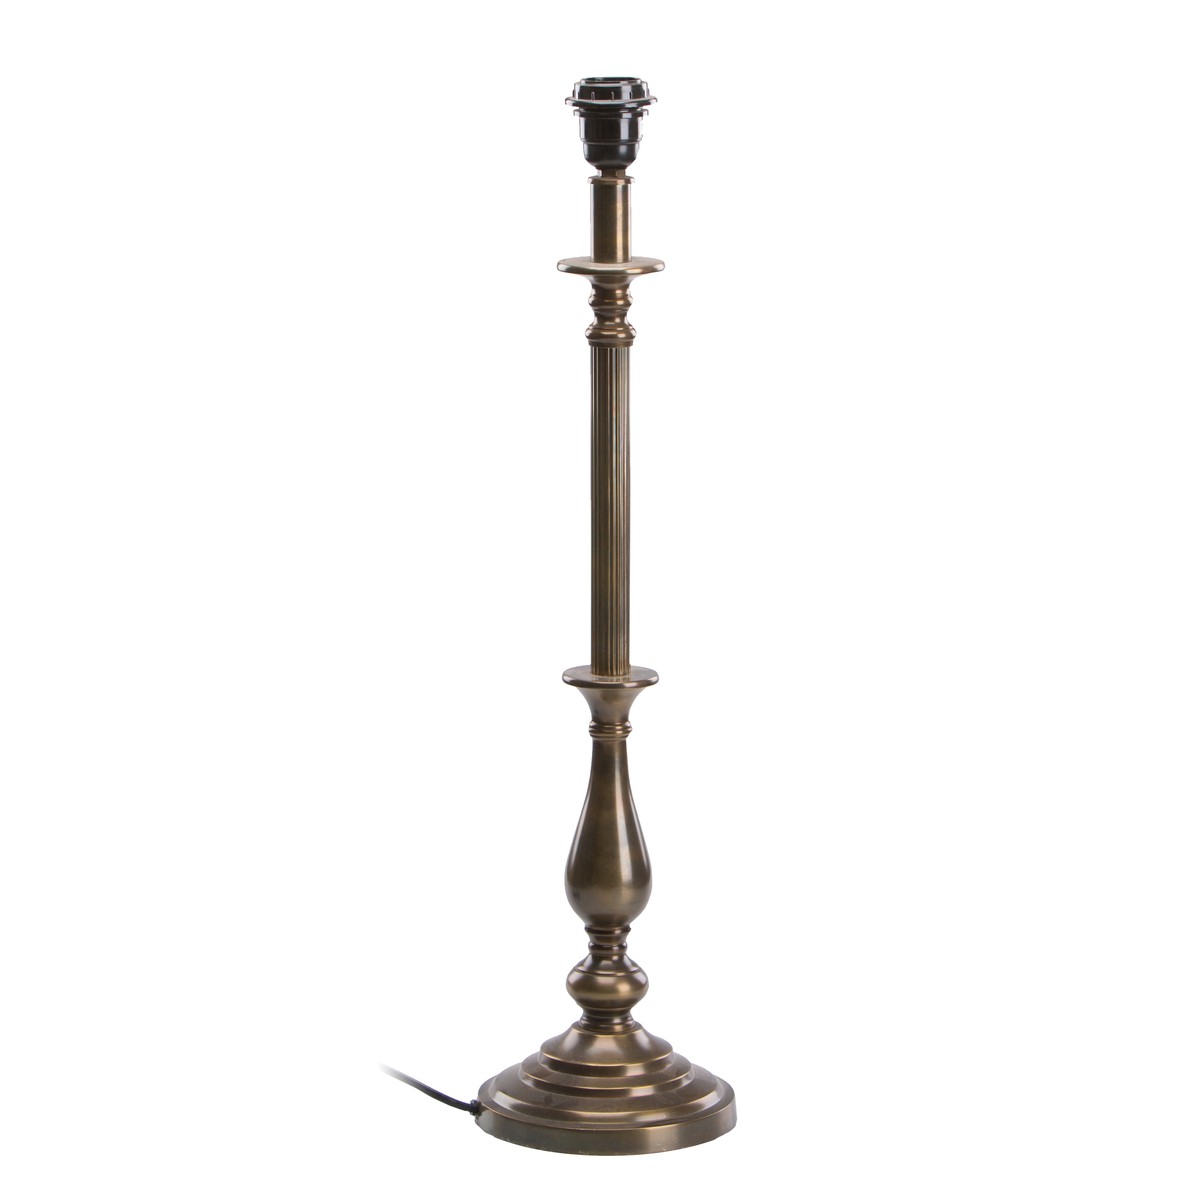   Pied de lampe allongé Brun bronze 16.5x16.5x60cm